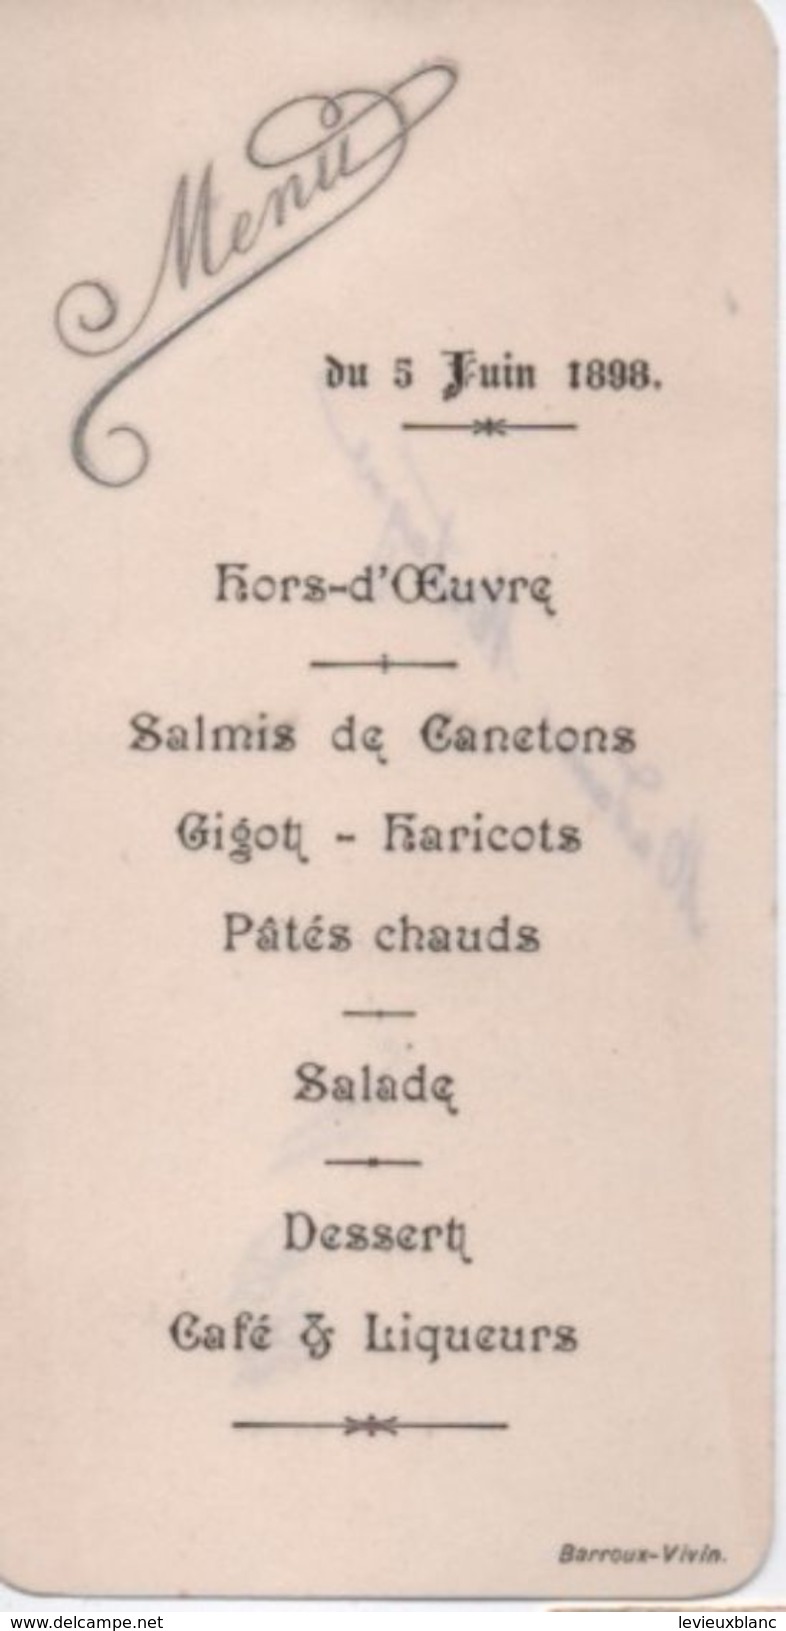 Menu / Petit/ Madame Matagne/ Barroux-Vivin / 1898        MENU218 - Menu